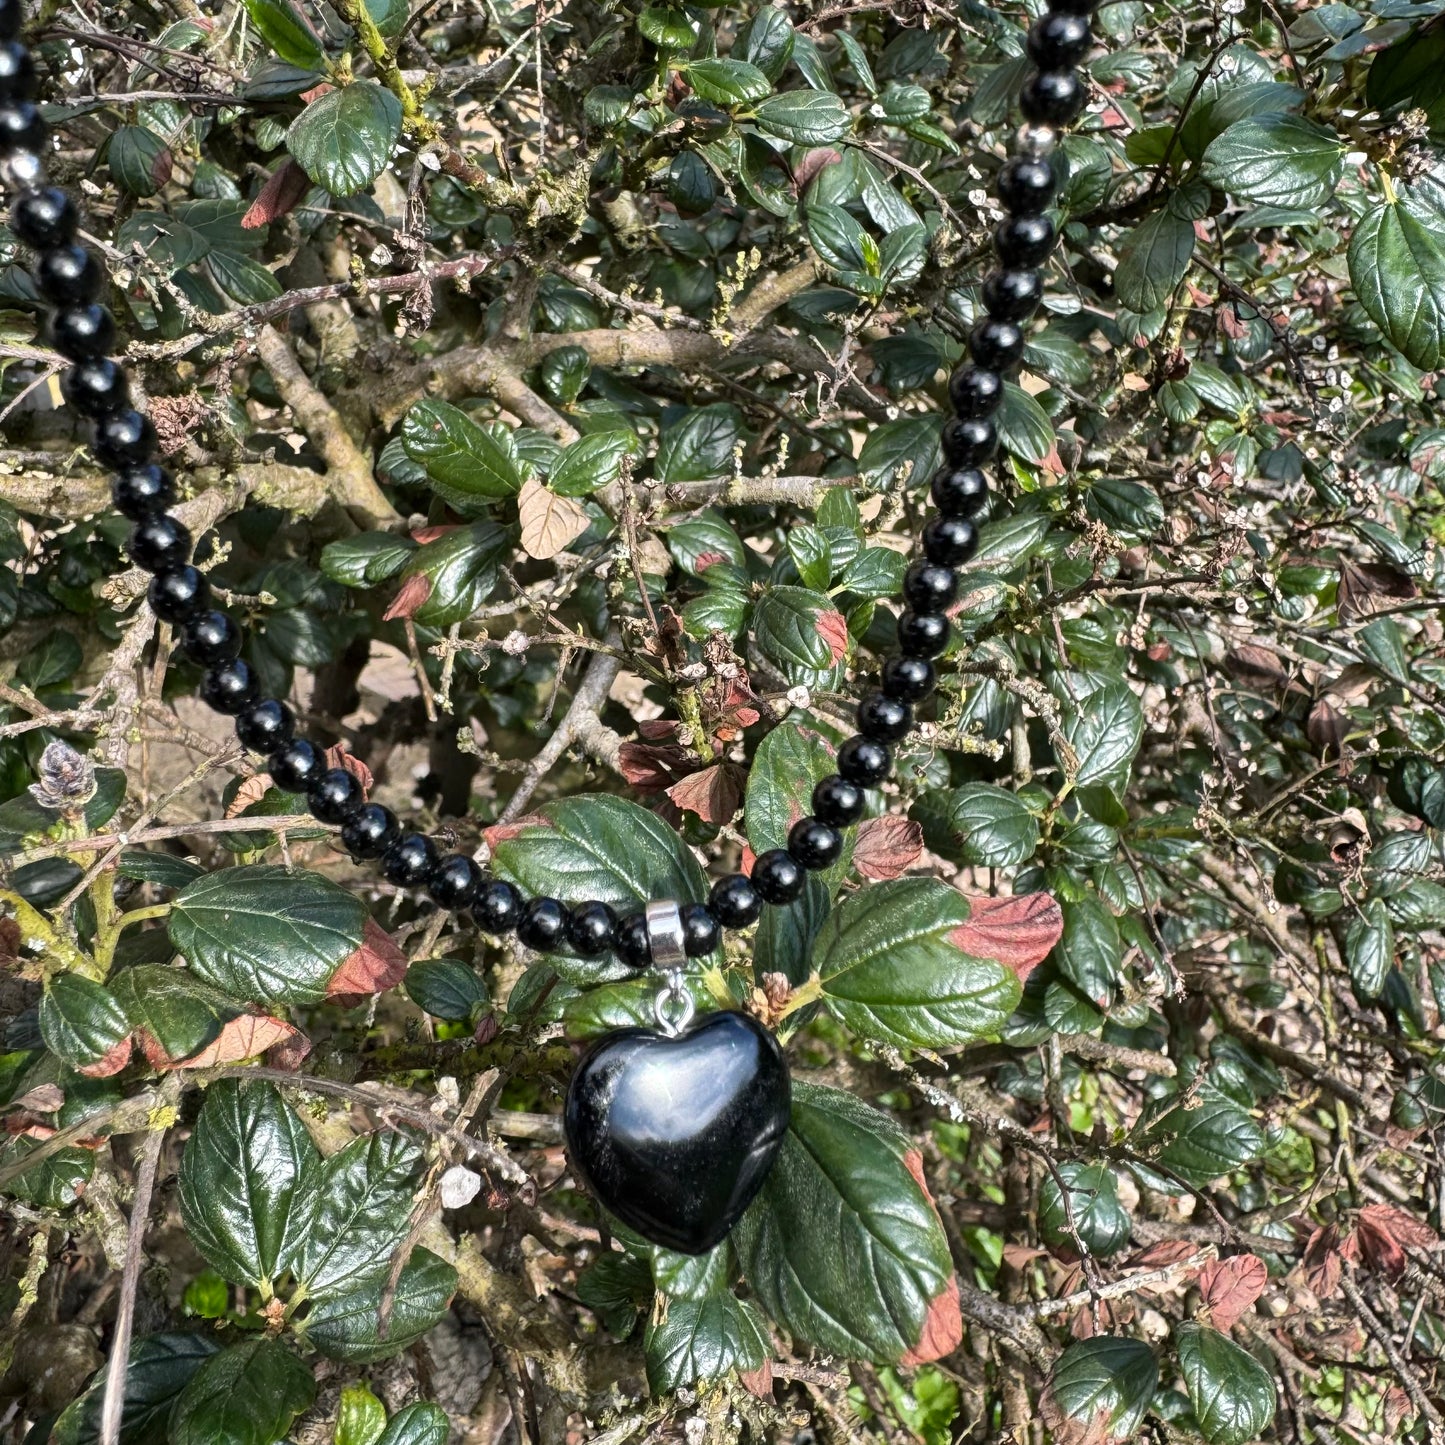 Black Obsidian Heart Charm Choker Necklace 🖤